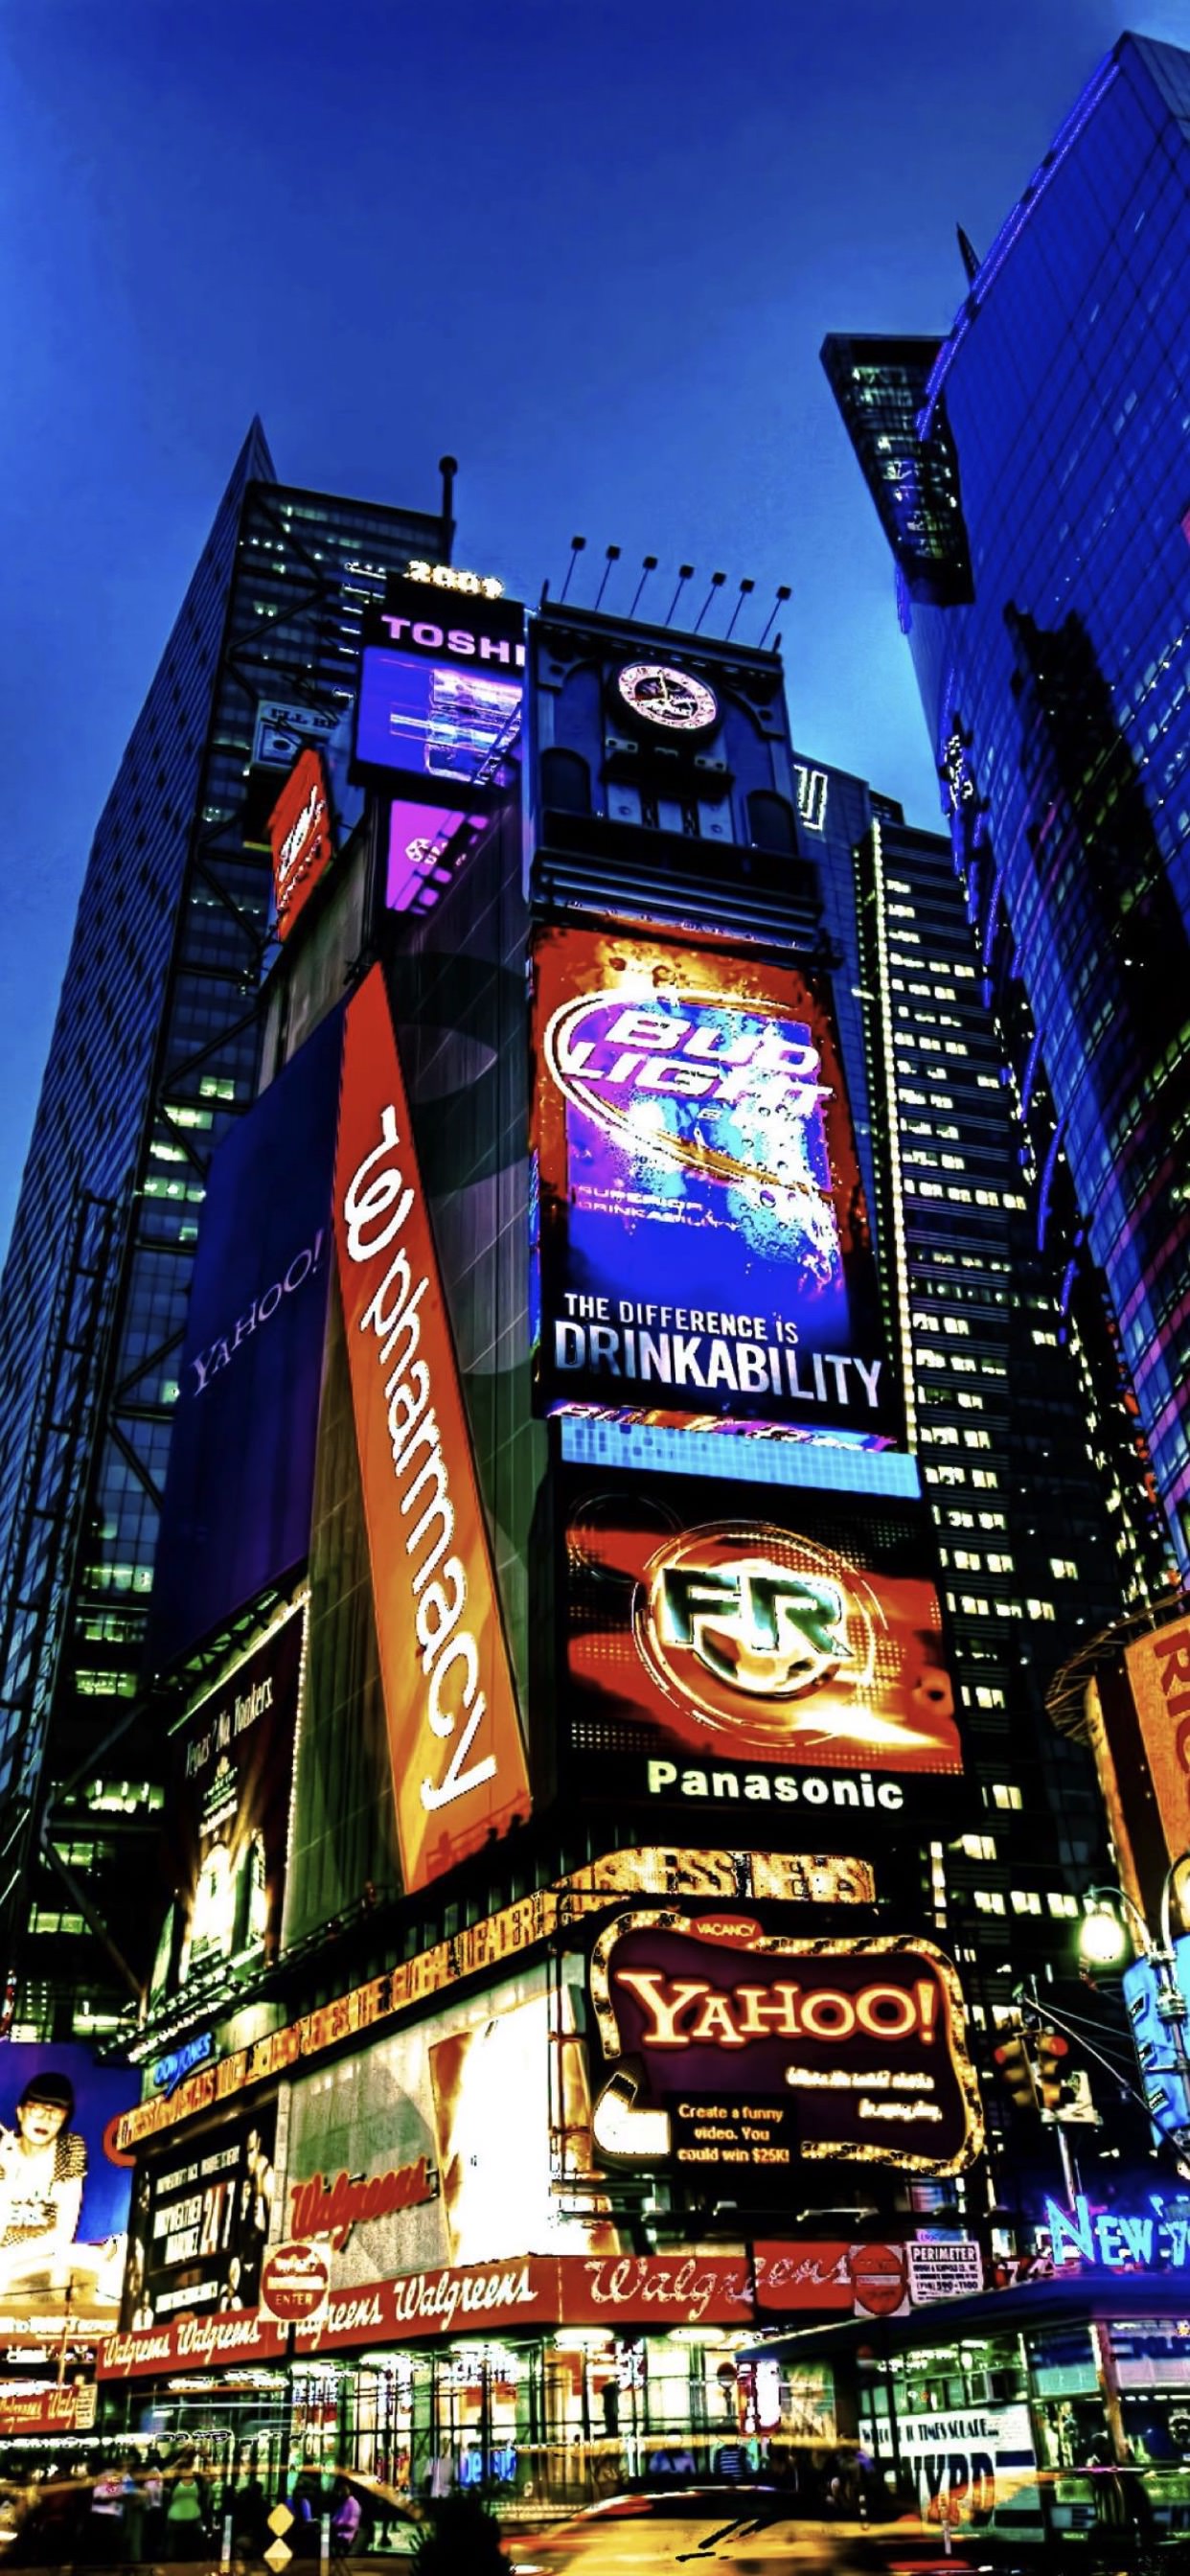 Landscape Cityscape Building Times Square Wallpaper Sc Iphone Xs Max